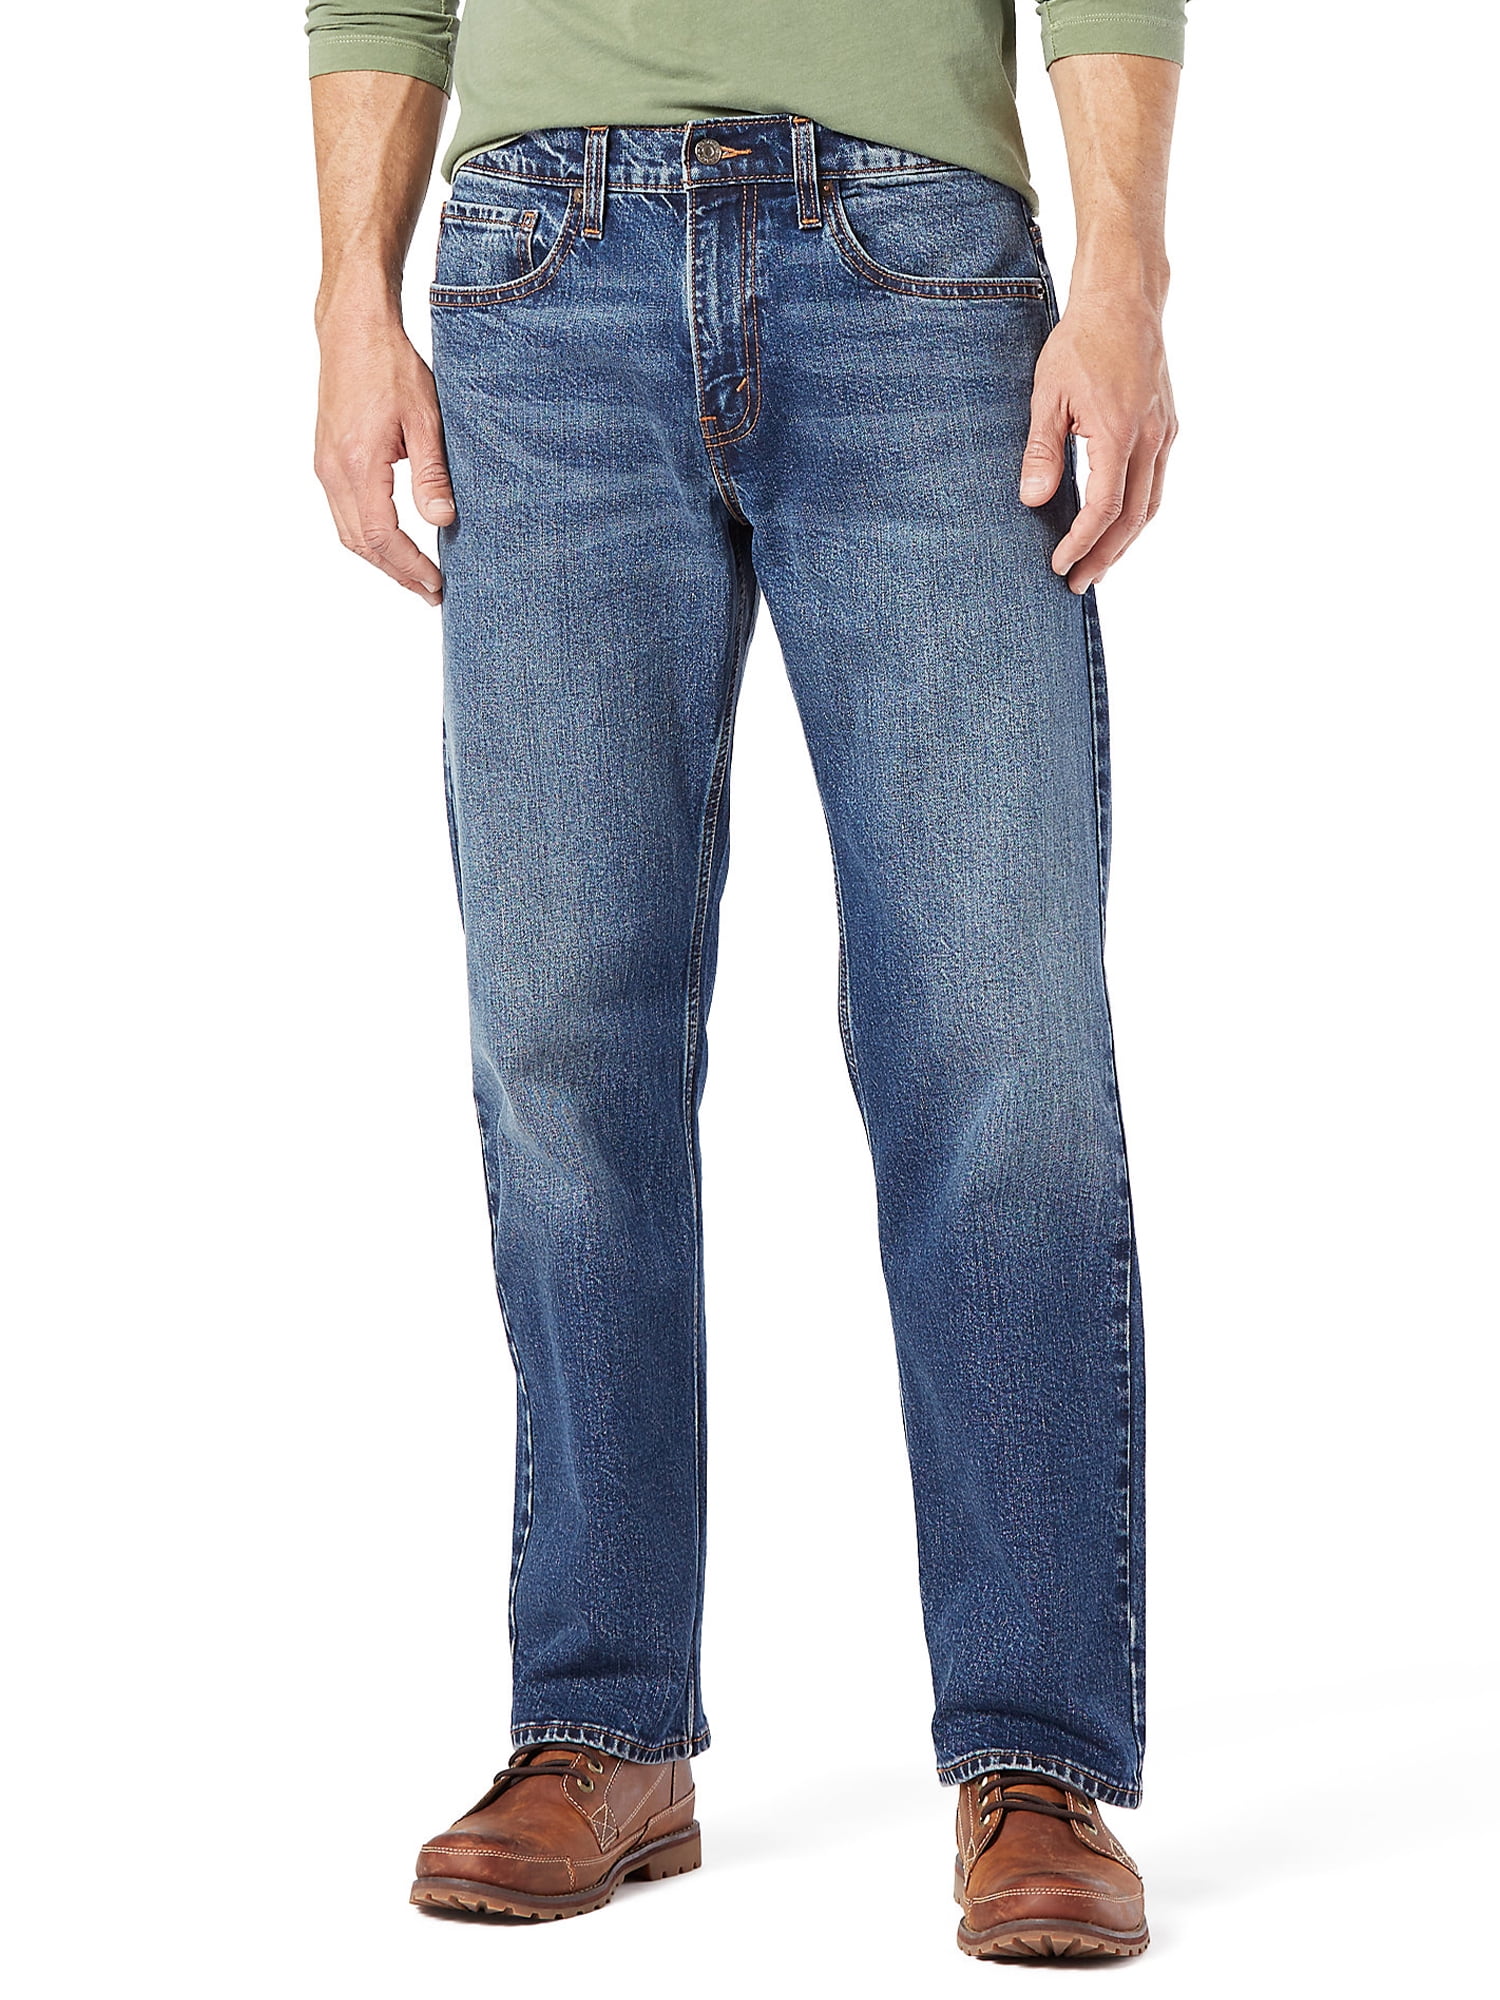 Levi's 527 Slim Boot Cut Jeans in Medium Chipped Medium Chipped 30 34 -  